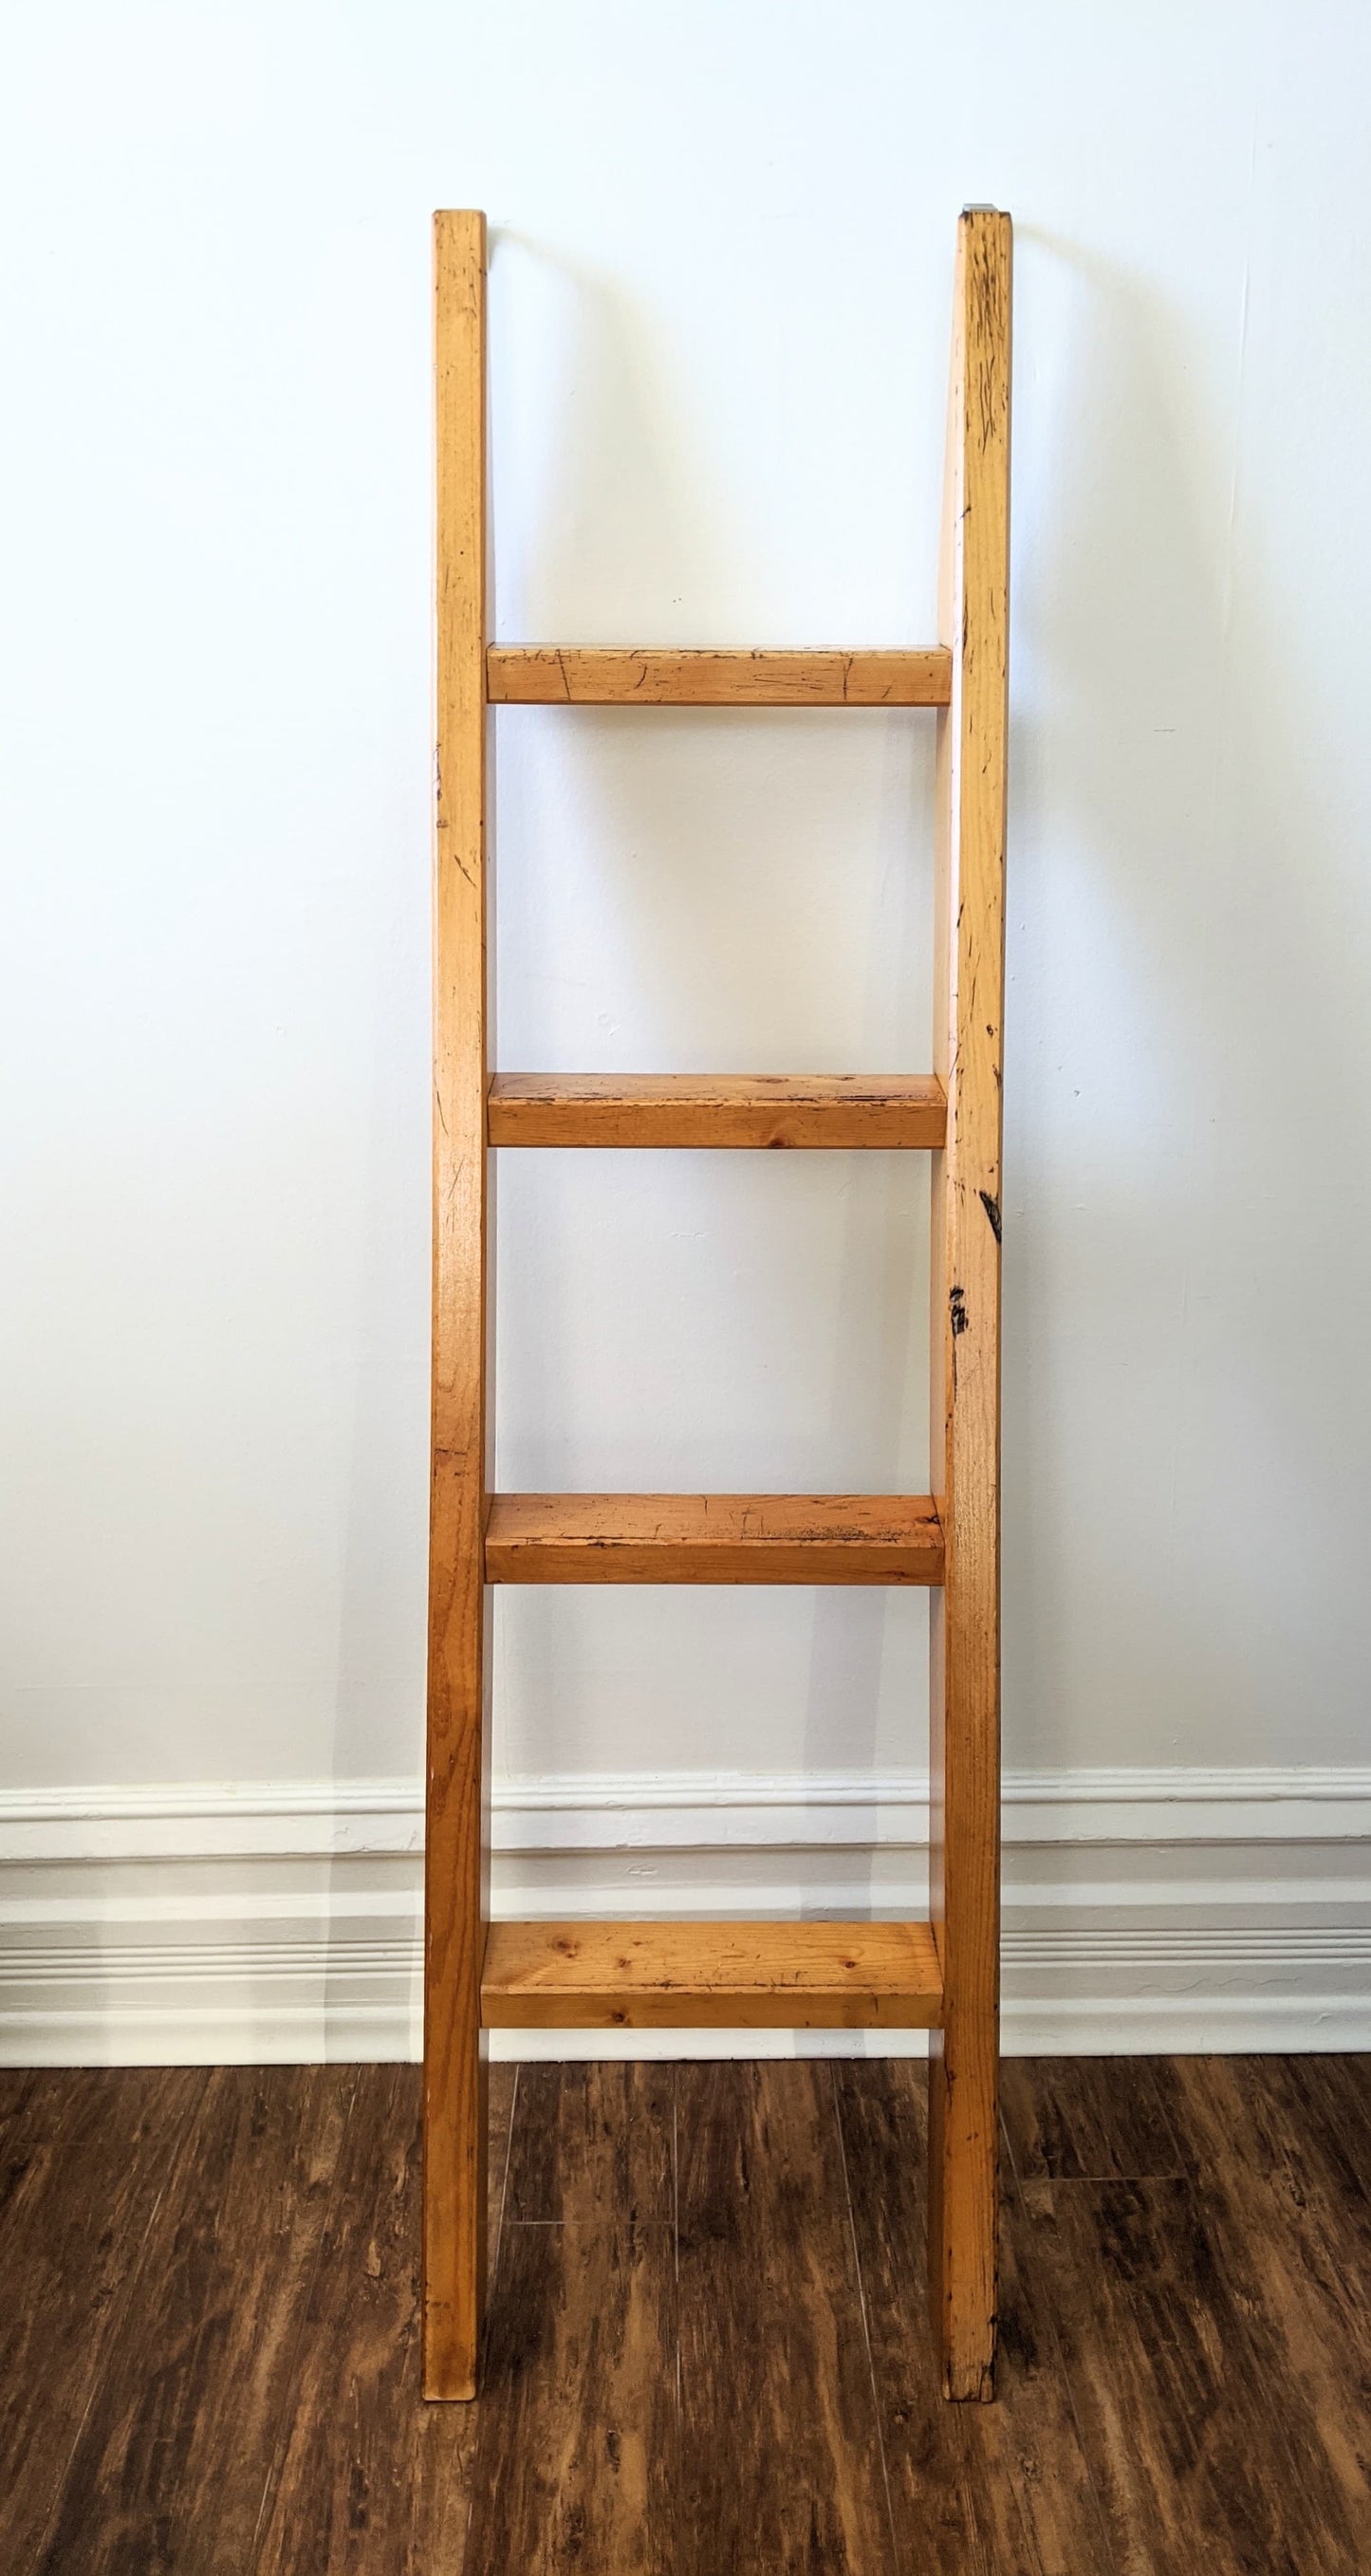 The Logan Ladder Shelf